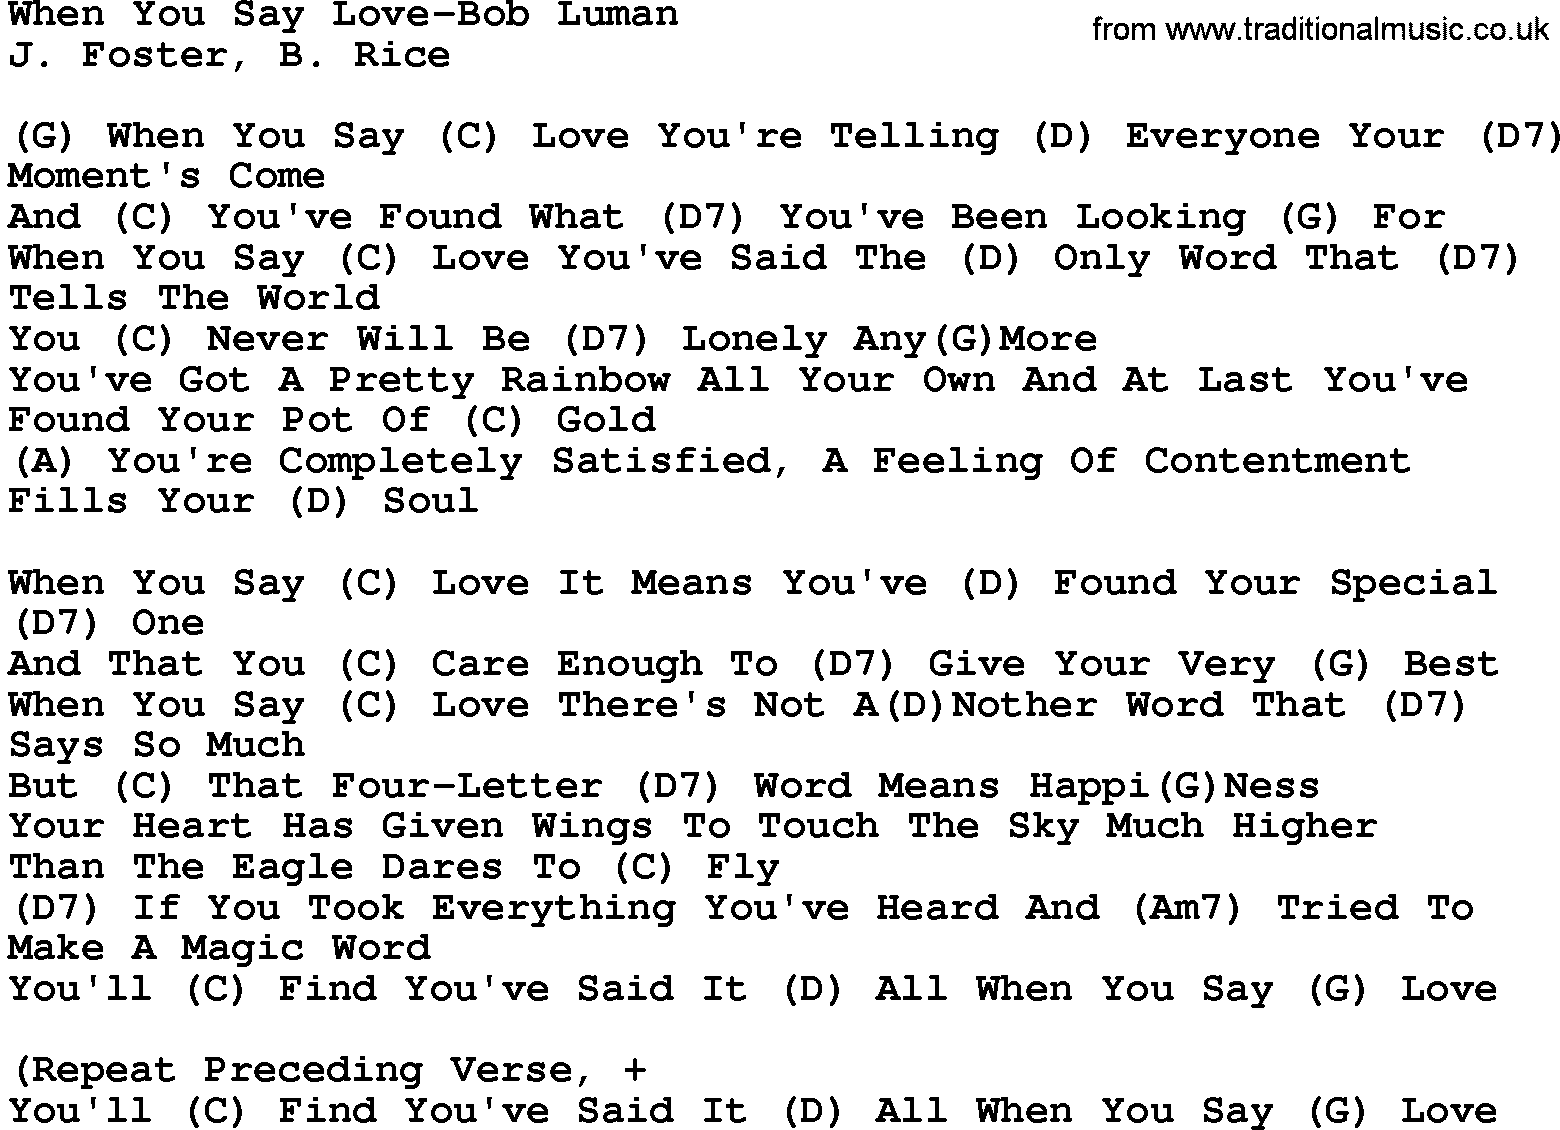 Country music song: When You Say Love-Bob Luman lyrics and chords